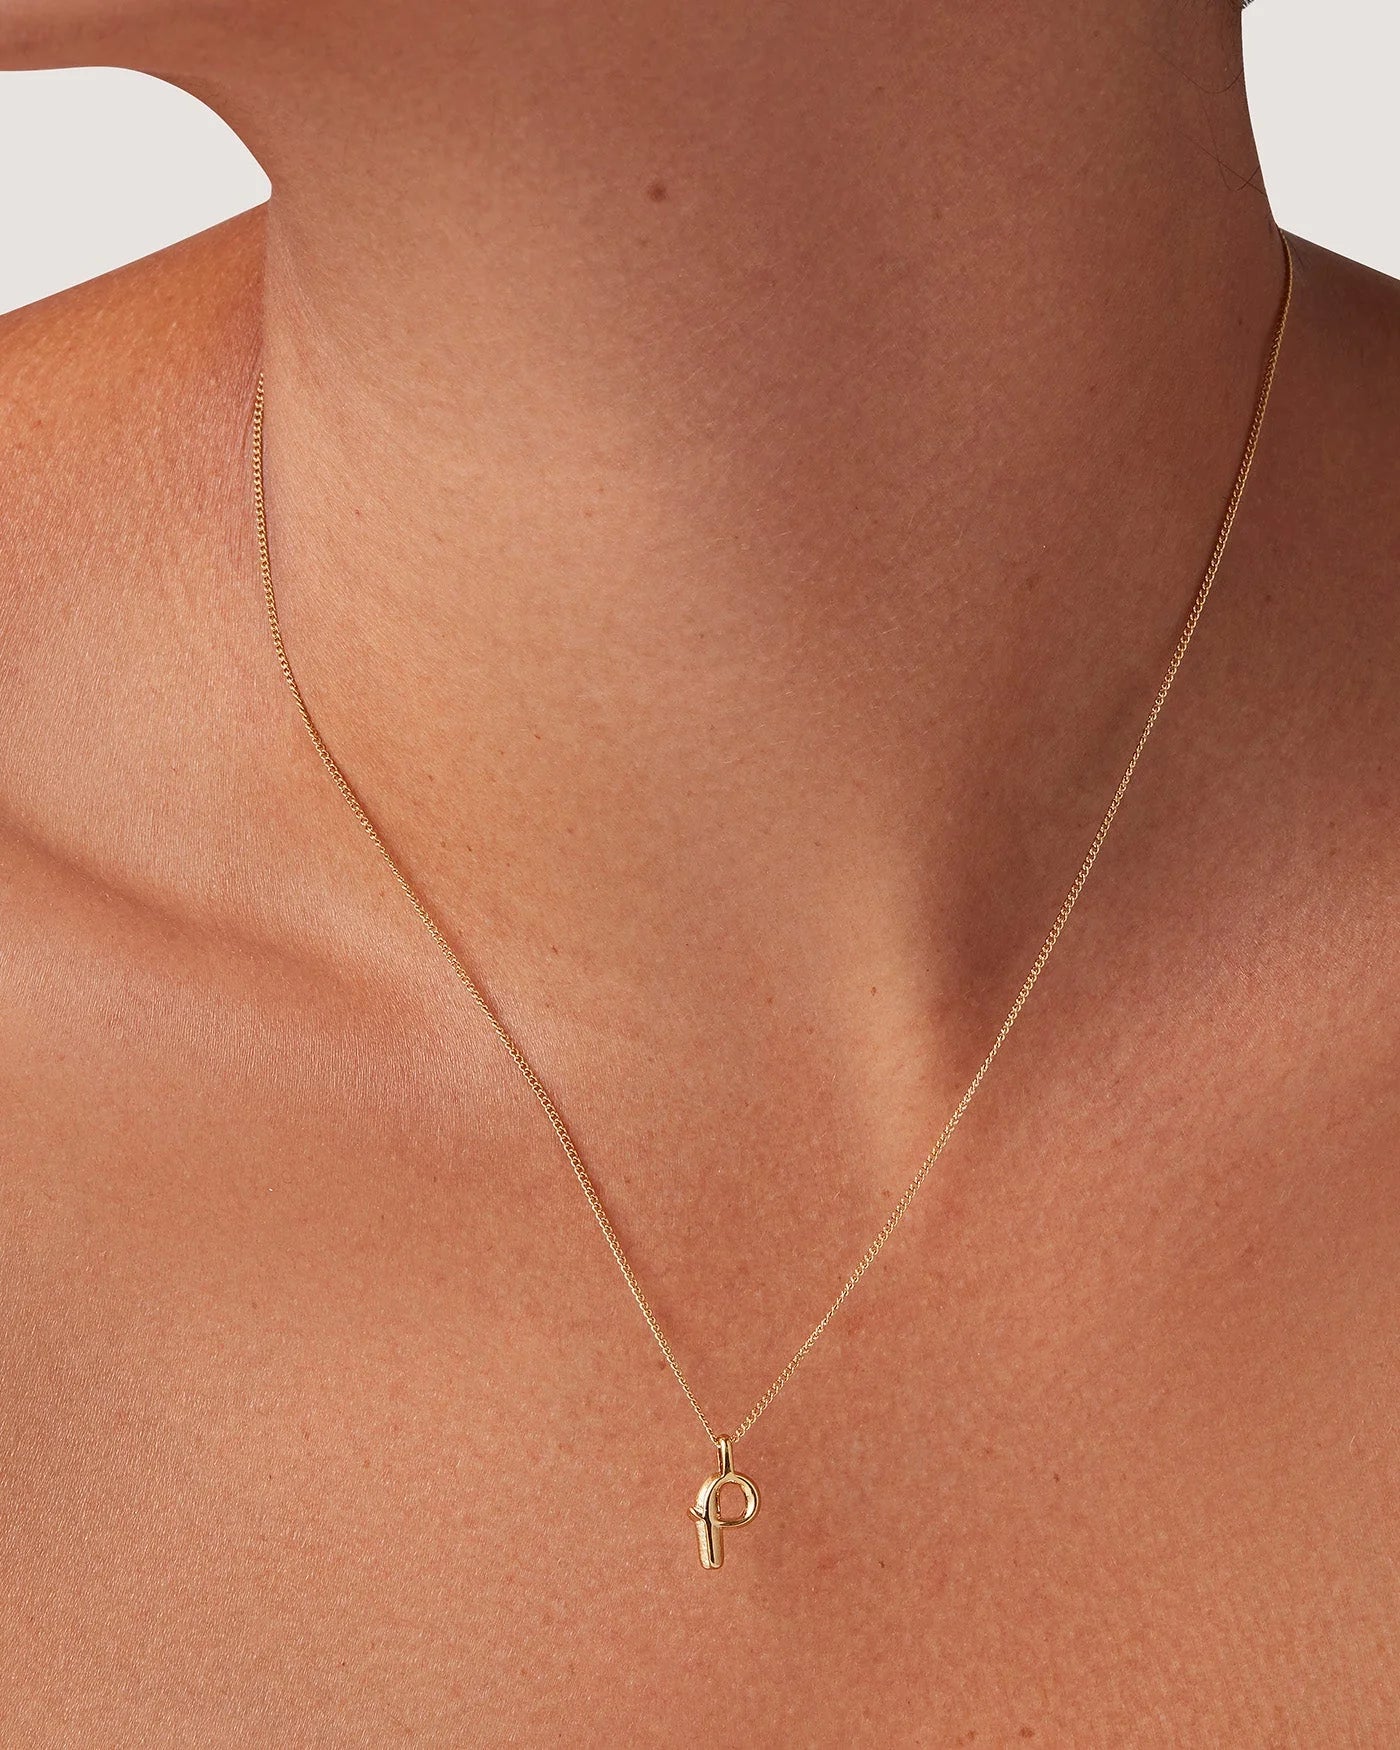 Monogram Necklace in Gold - P